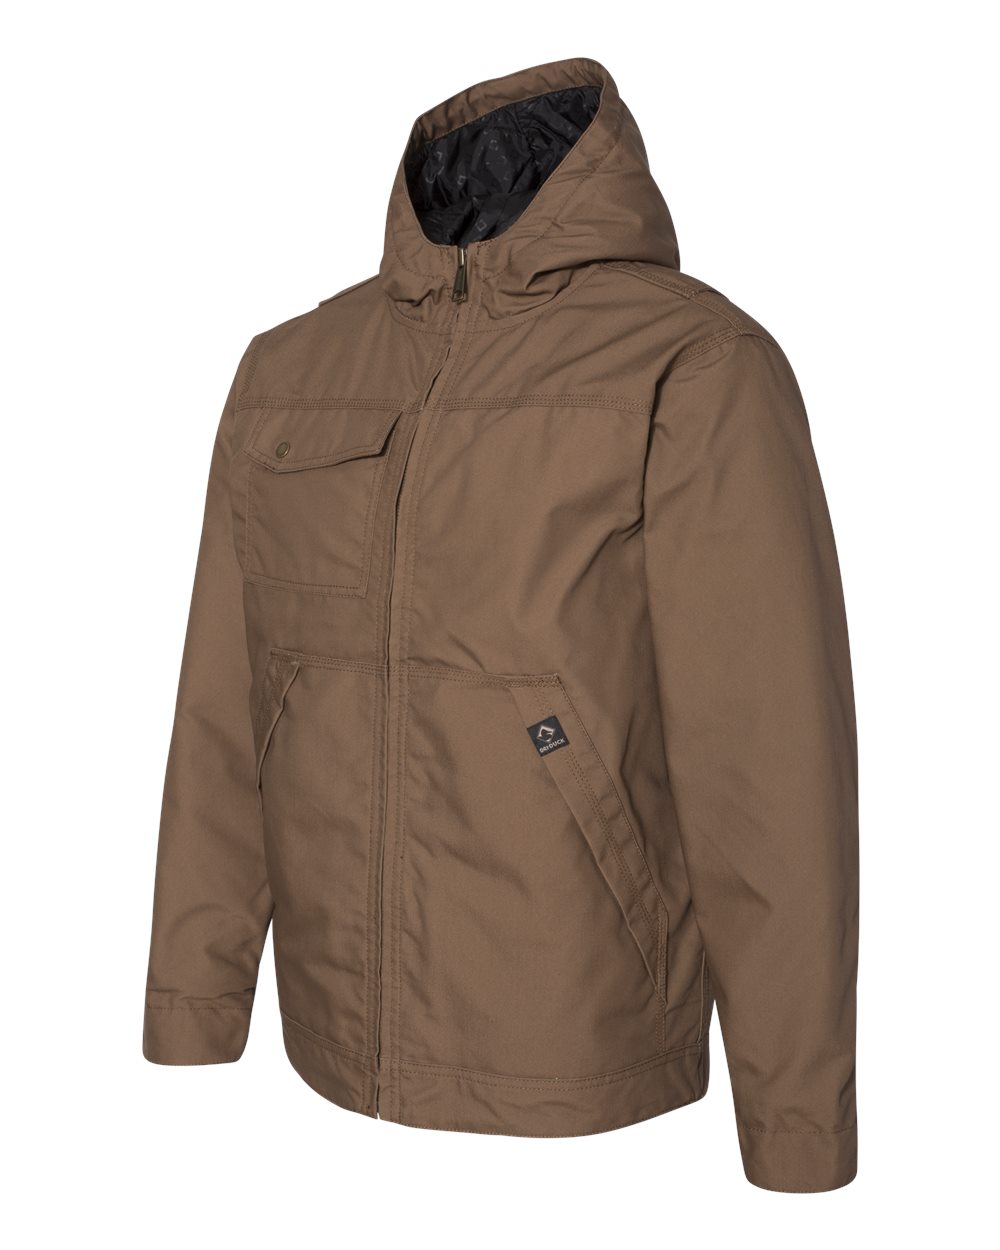 Men's 8.5oz, 60% Cotton/40% Polyester Storm Shield TM Hooded Canvas Yukon Jacket - FIELD KHAKI - 2XL - image 2 of 4